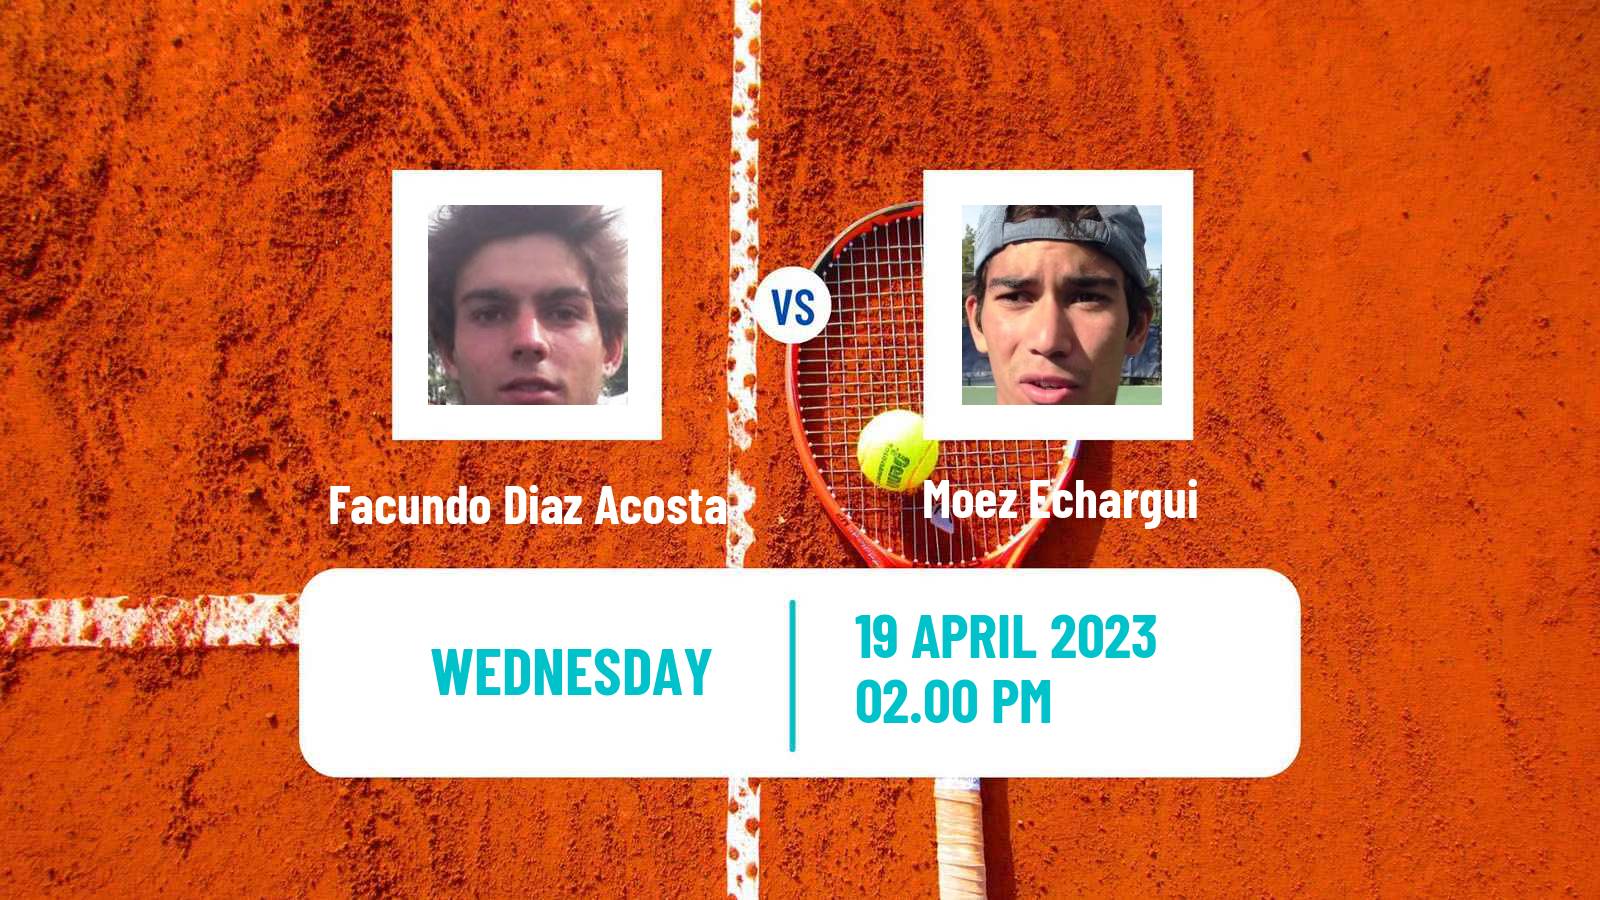 Tennis ATP Challenger Facundo Diaz Acosta - Moez Echargui